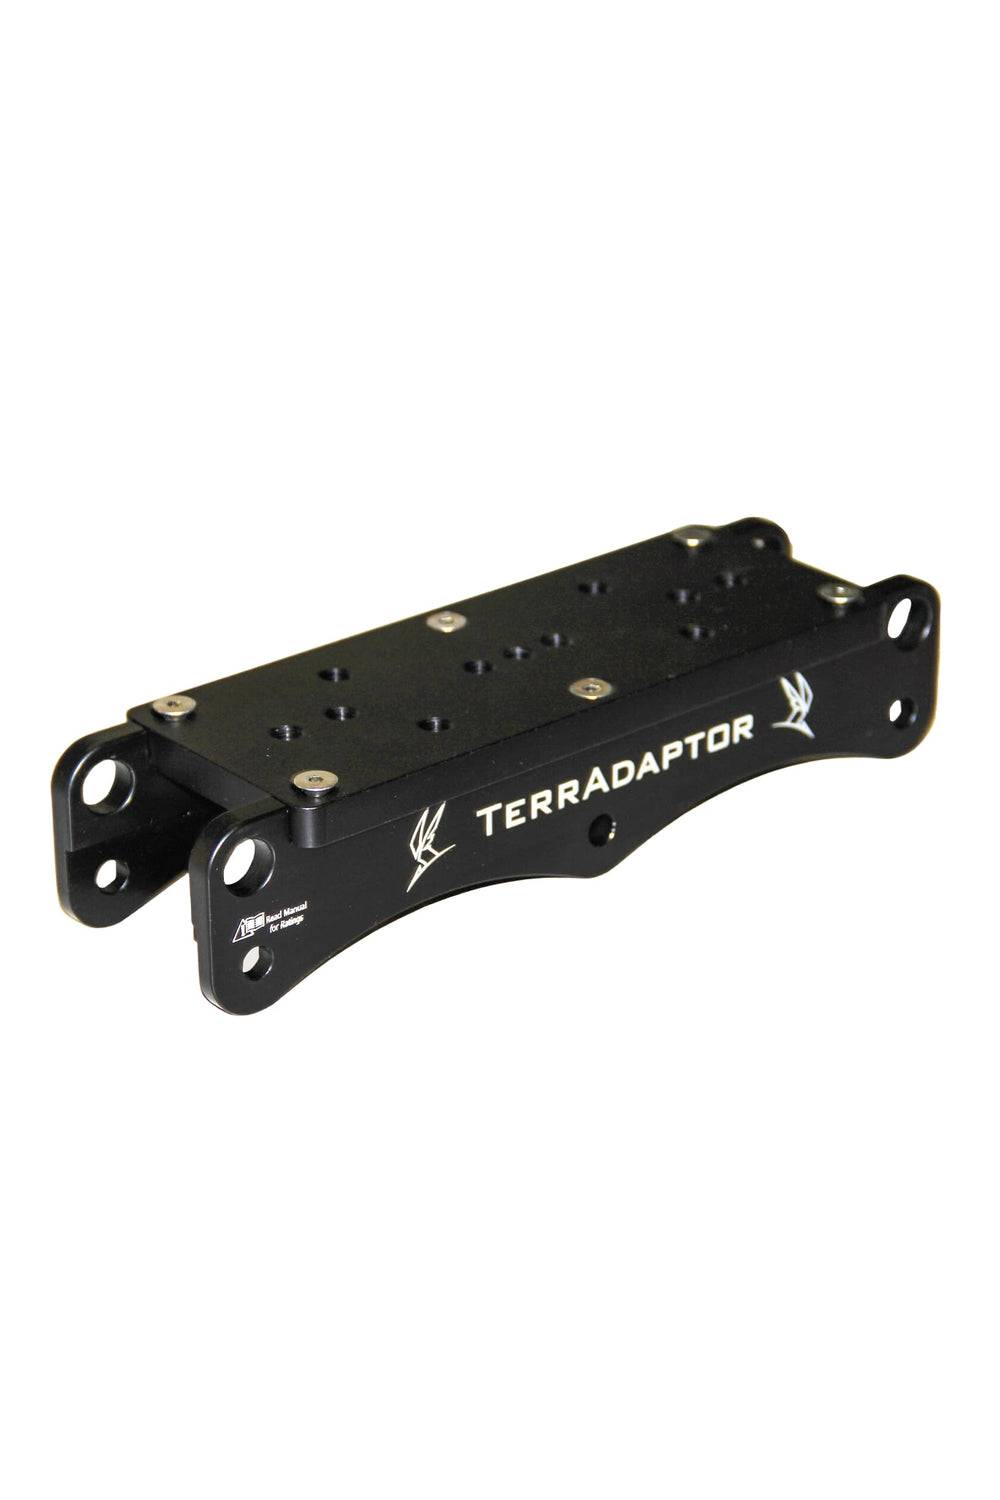 SMC - TerrAdaptor Standard Winch Bracket